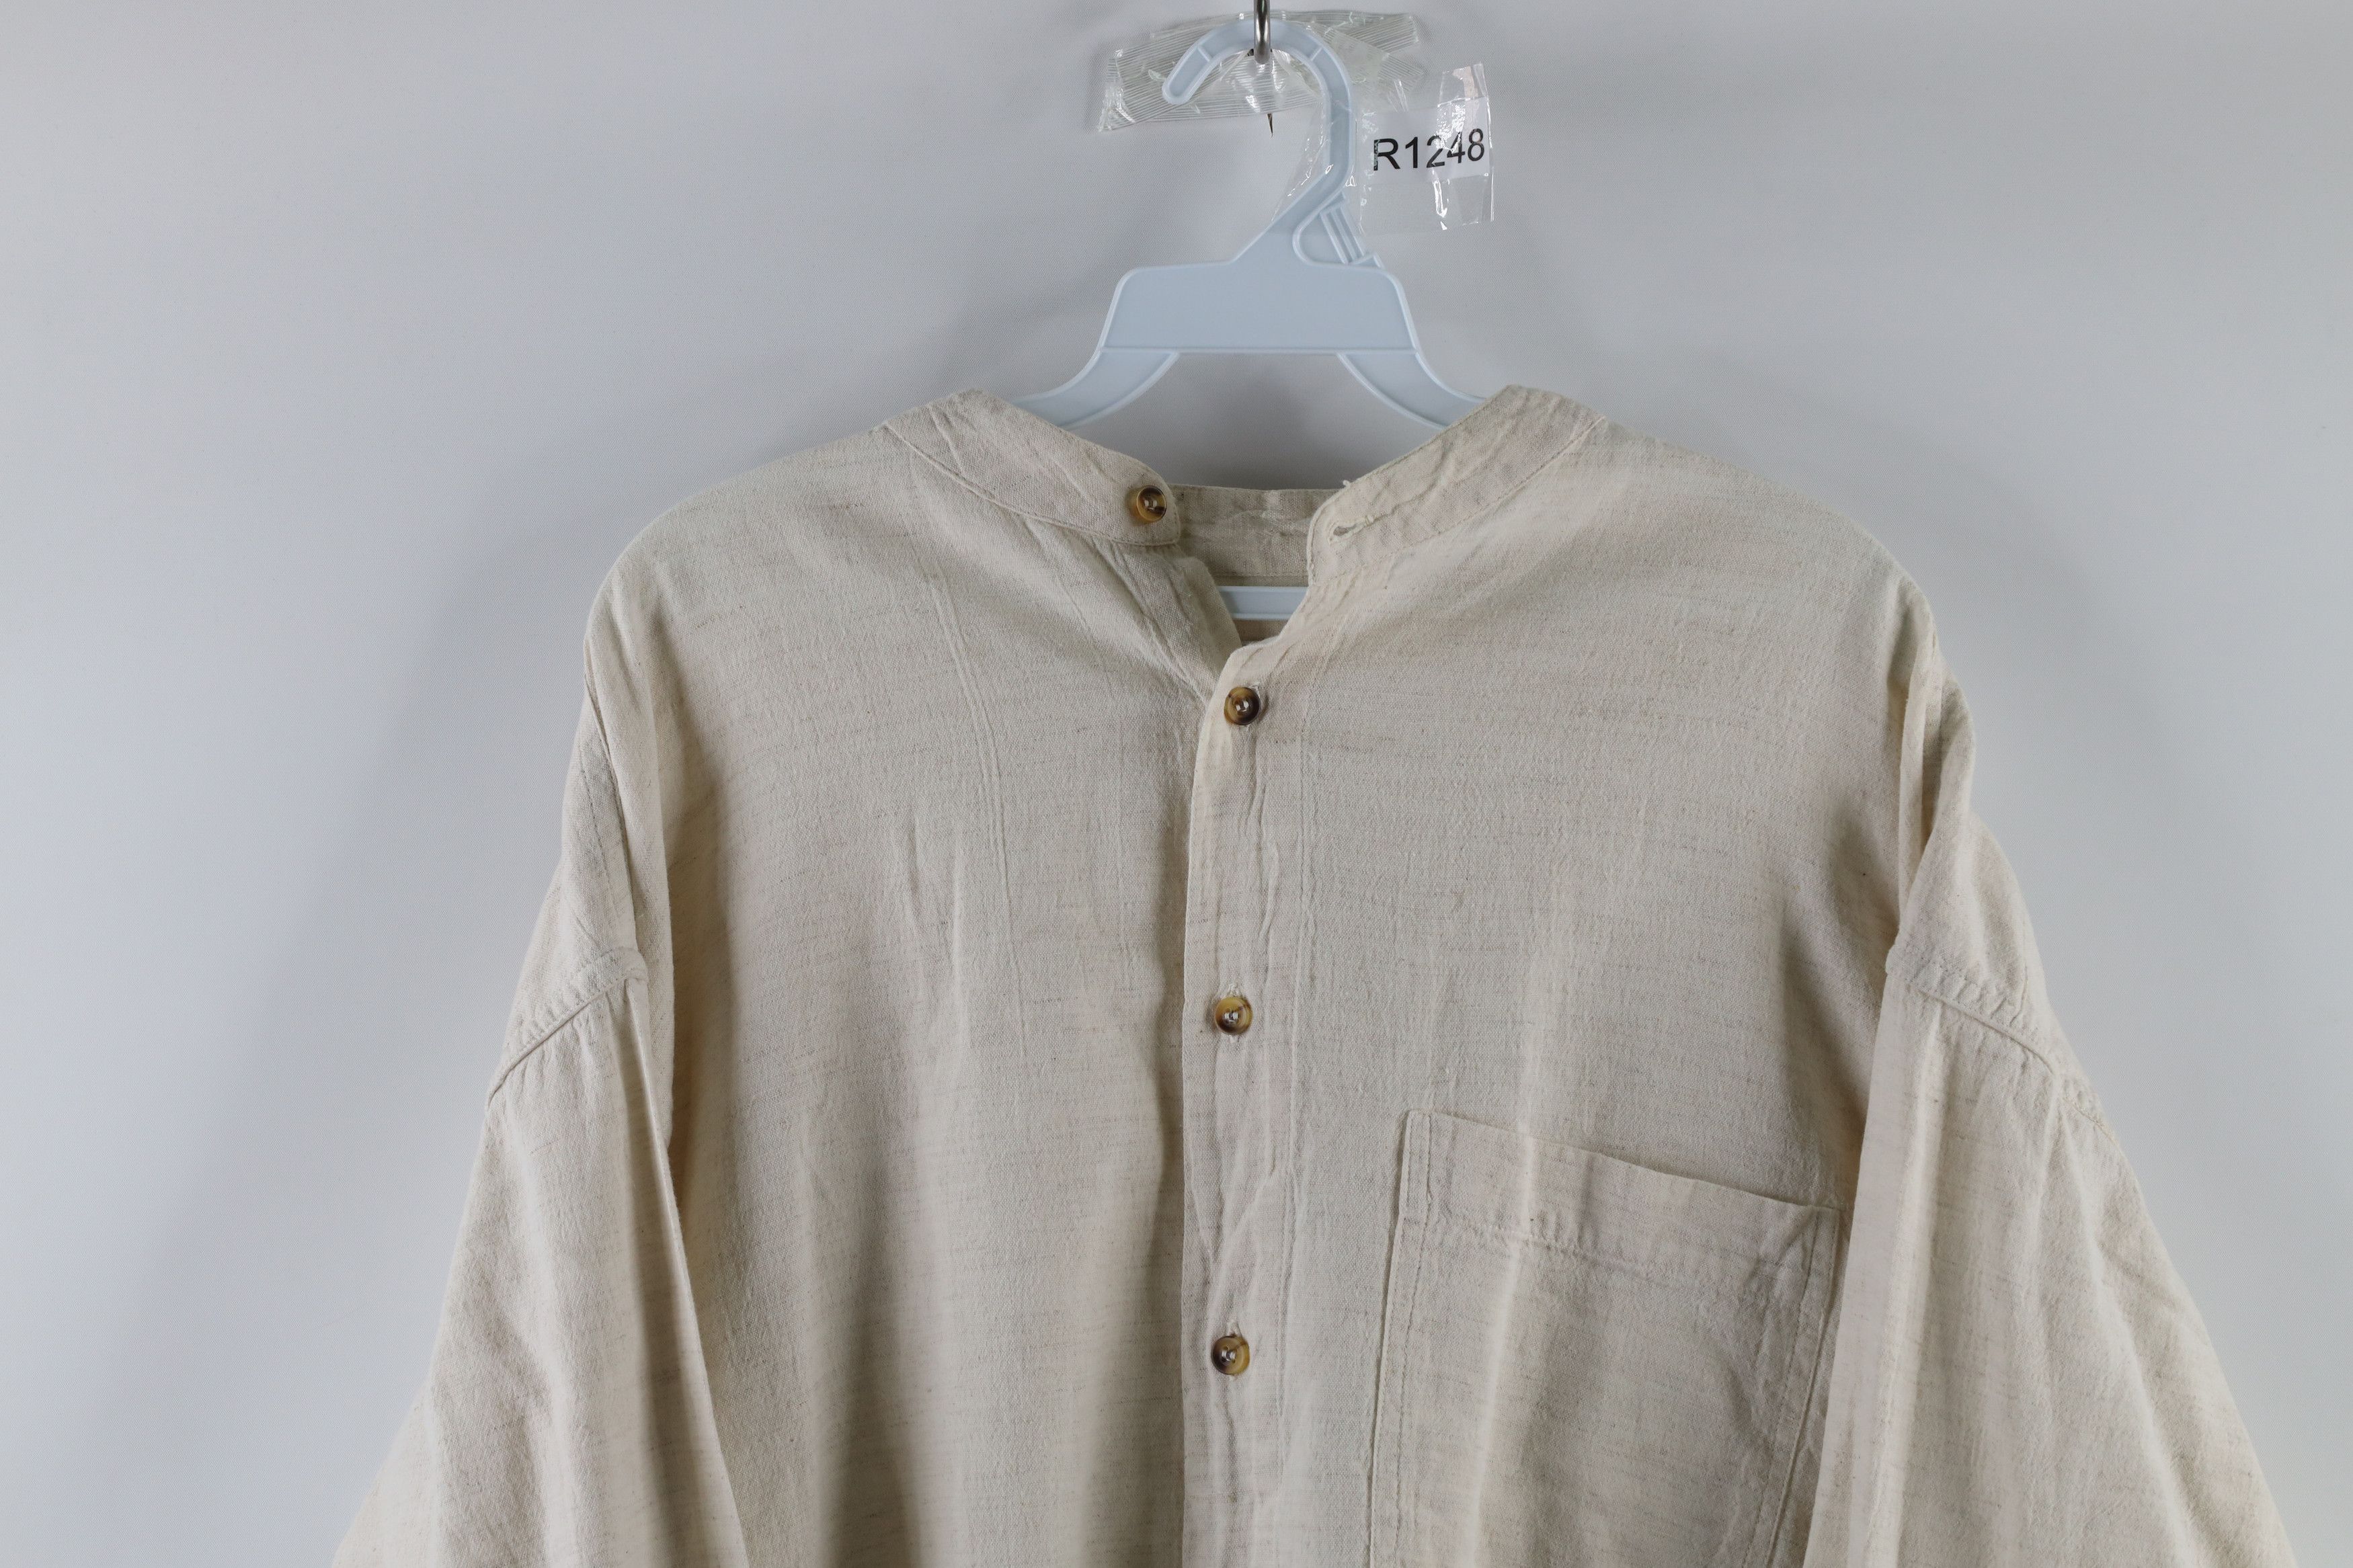 Vintage Vintage 90s Streetwear Banded Collar Button Shirt Beige Tan Size US XL / EU 56 / 4 - 2 Preview